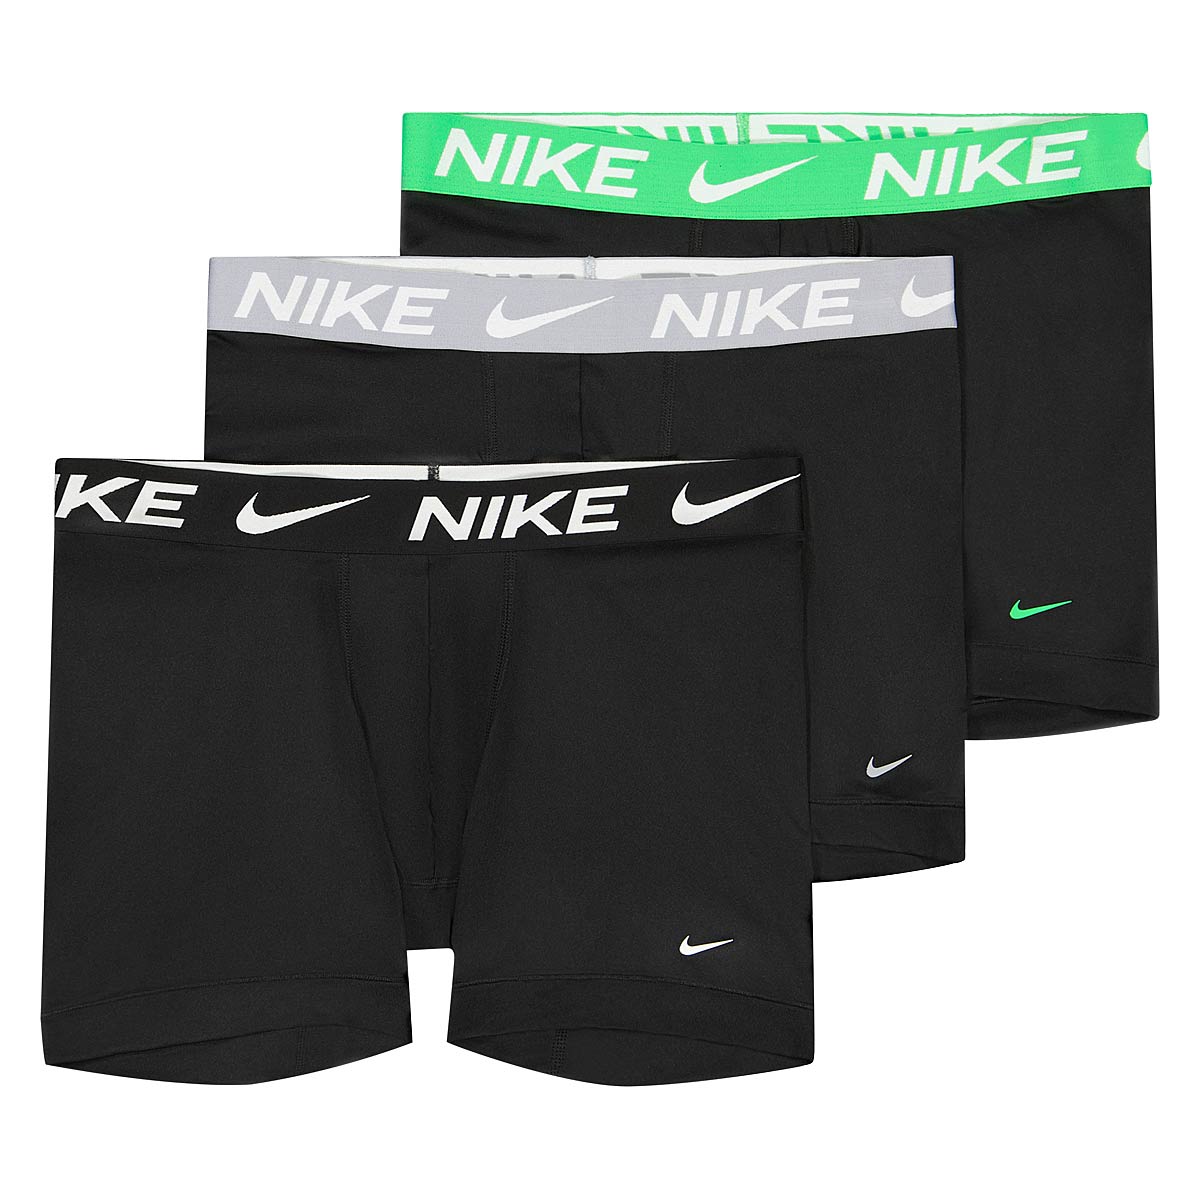 Image of Nike Boxer Brief 3pk, Green/black/grey